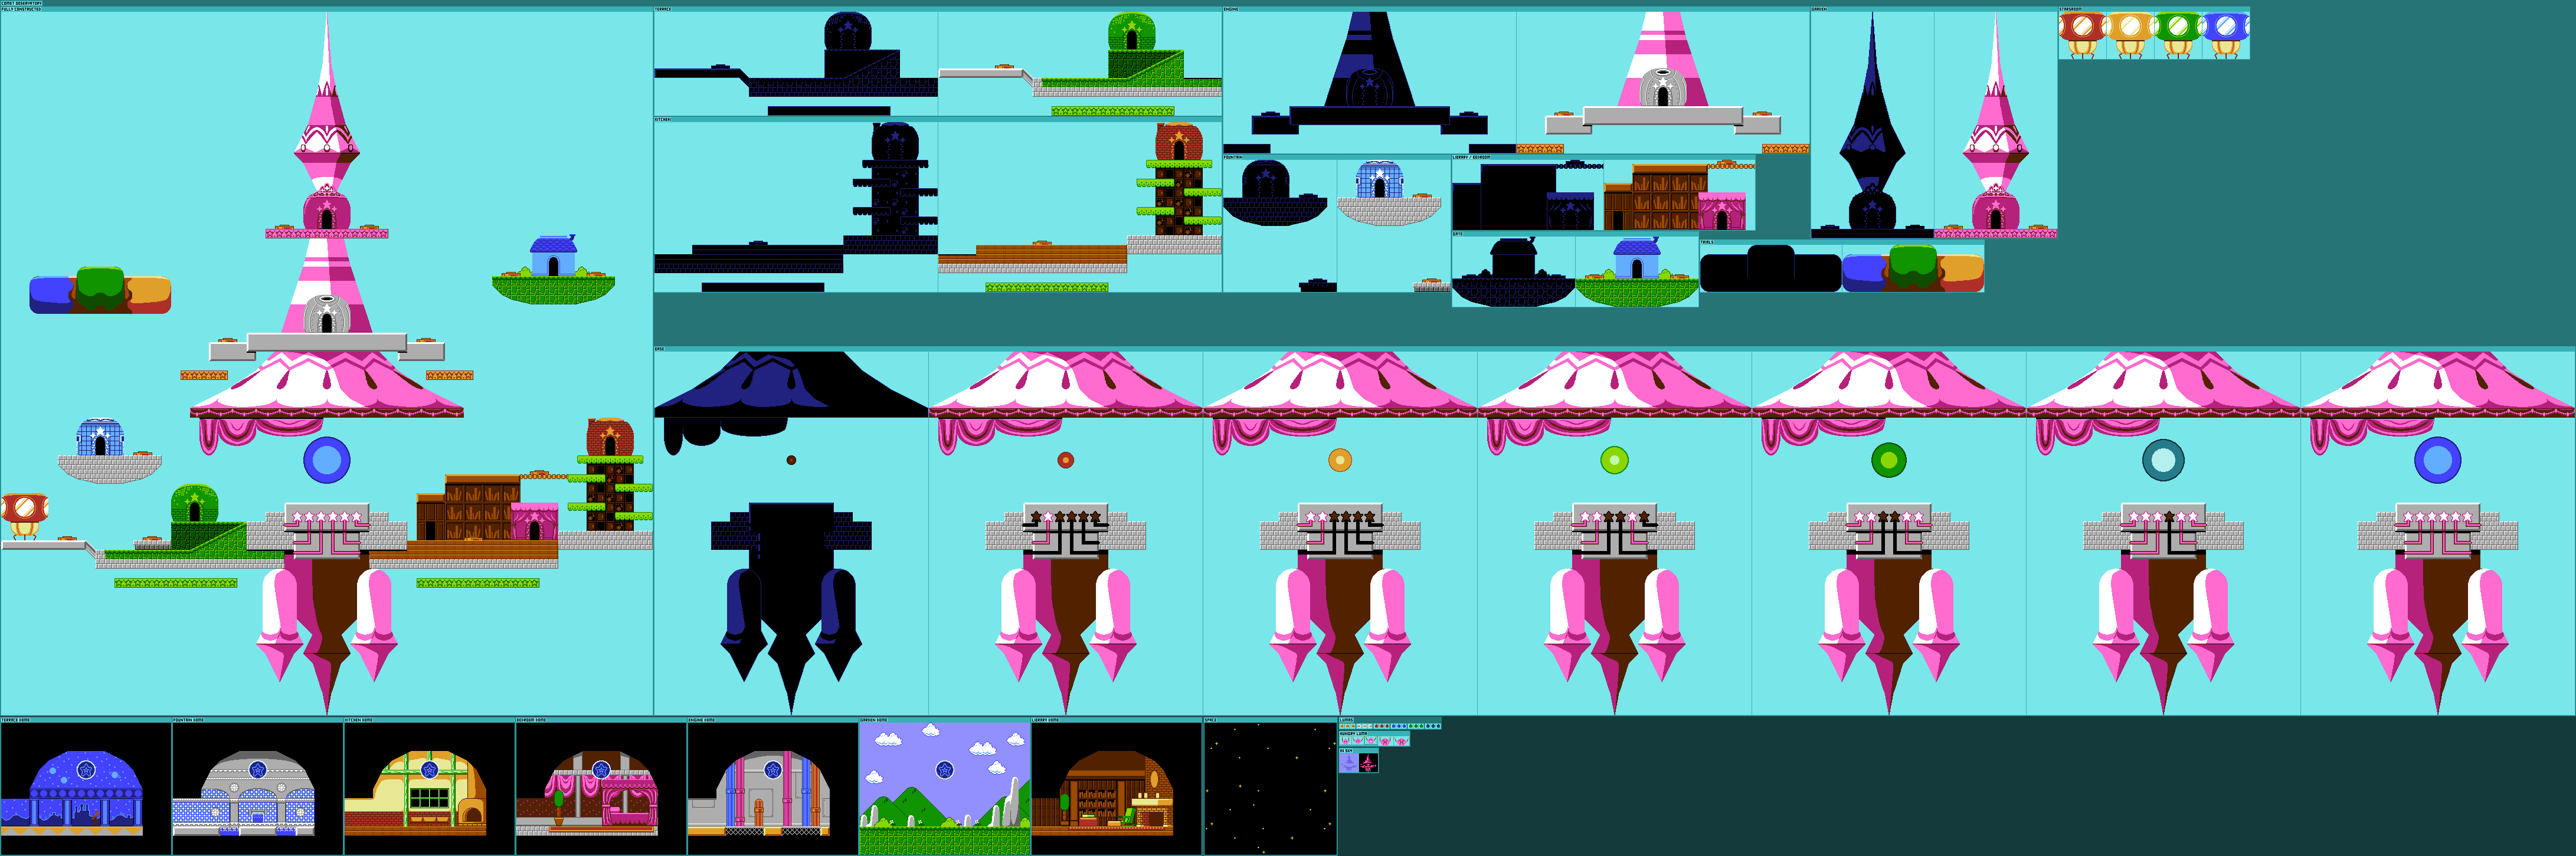 Mario Customs - Comet Observatory (Super Mario Bros. 1 NES-Style)